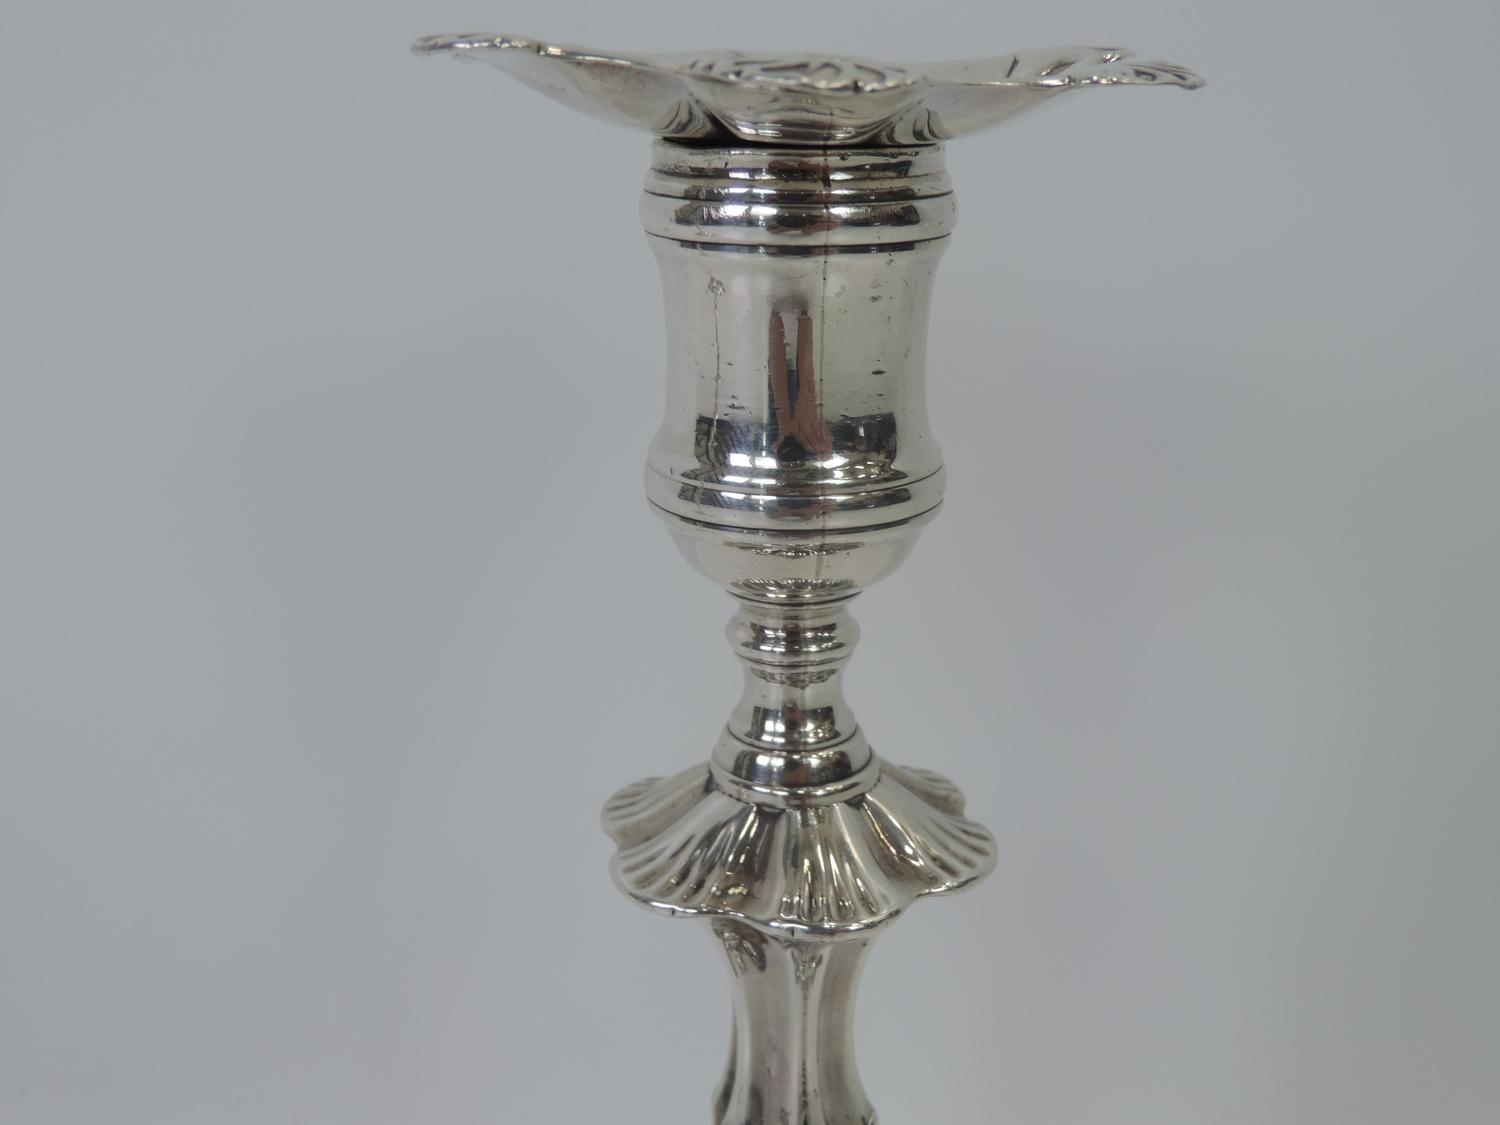 Pair of Good Quality Georgian Silver Candlesticks - John Cafe 1751 - 950 grams - 8.5" High - Image 4 of 10